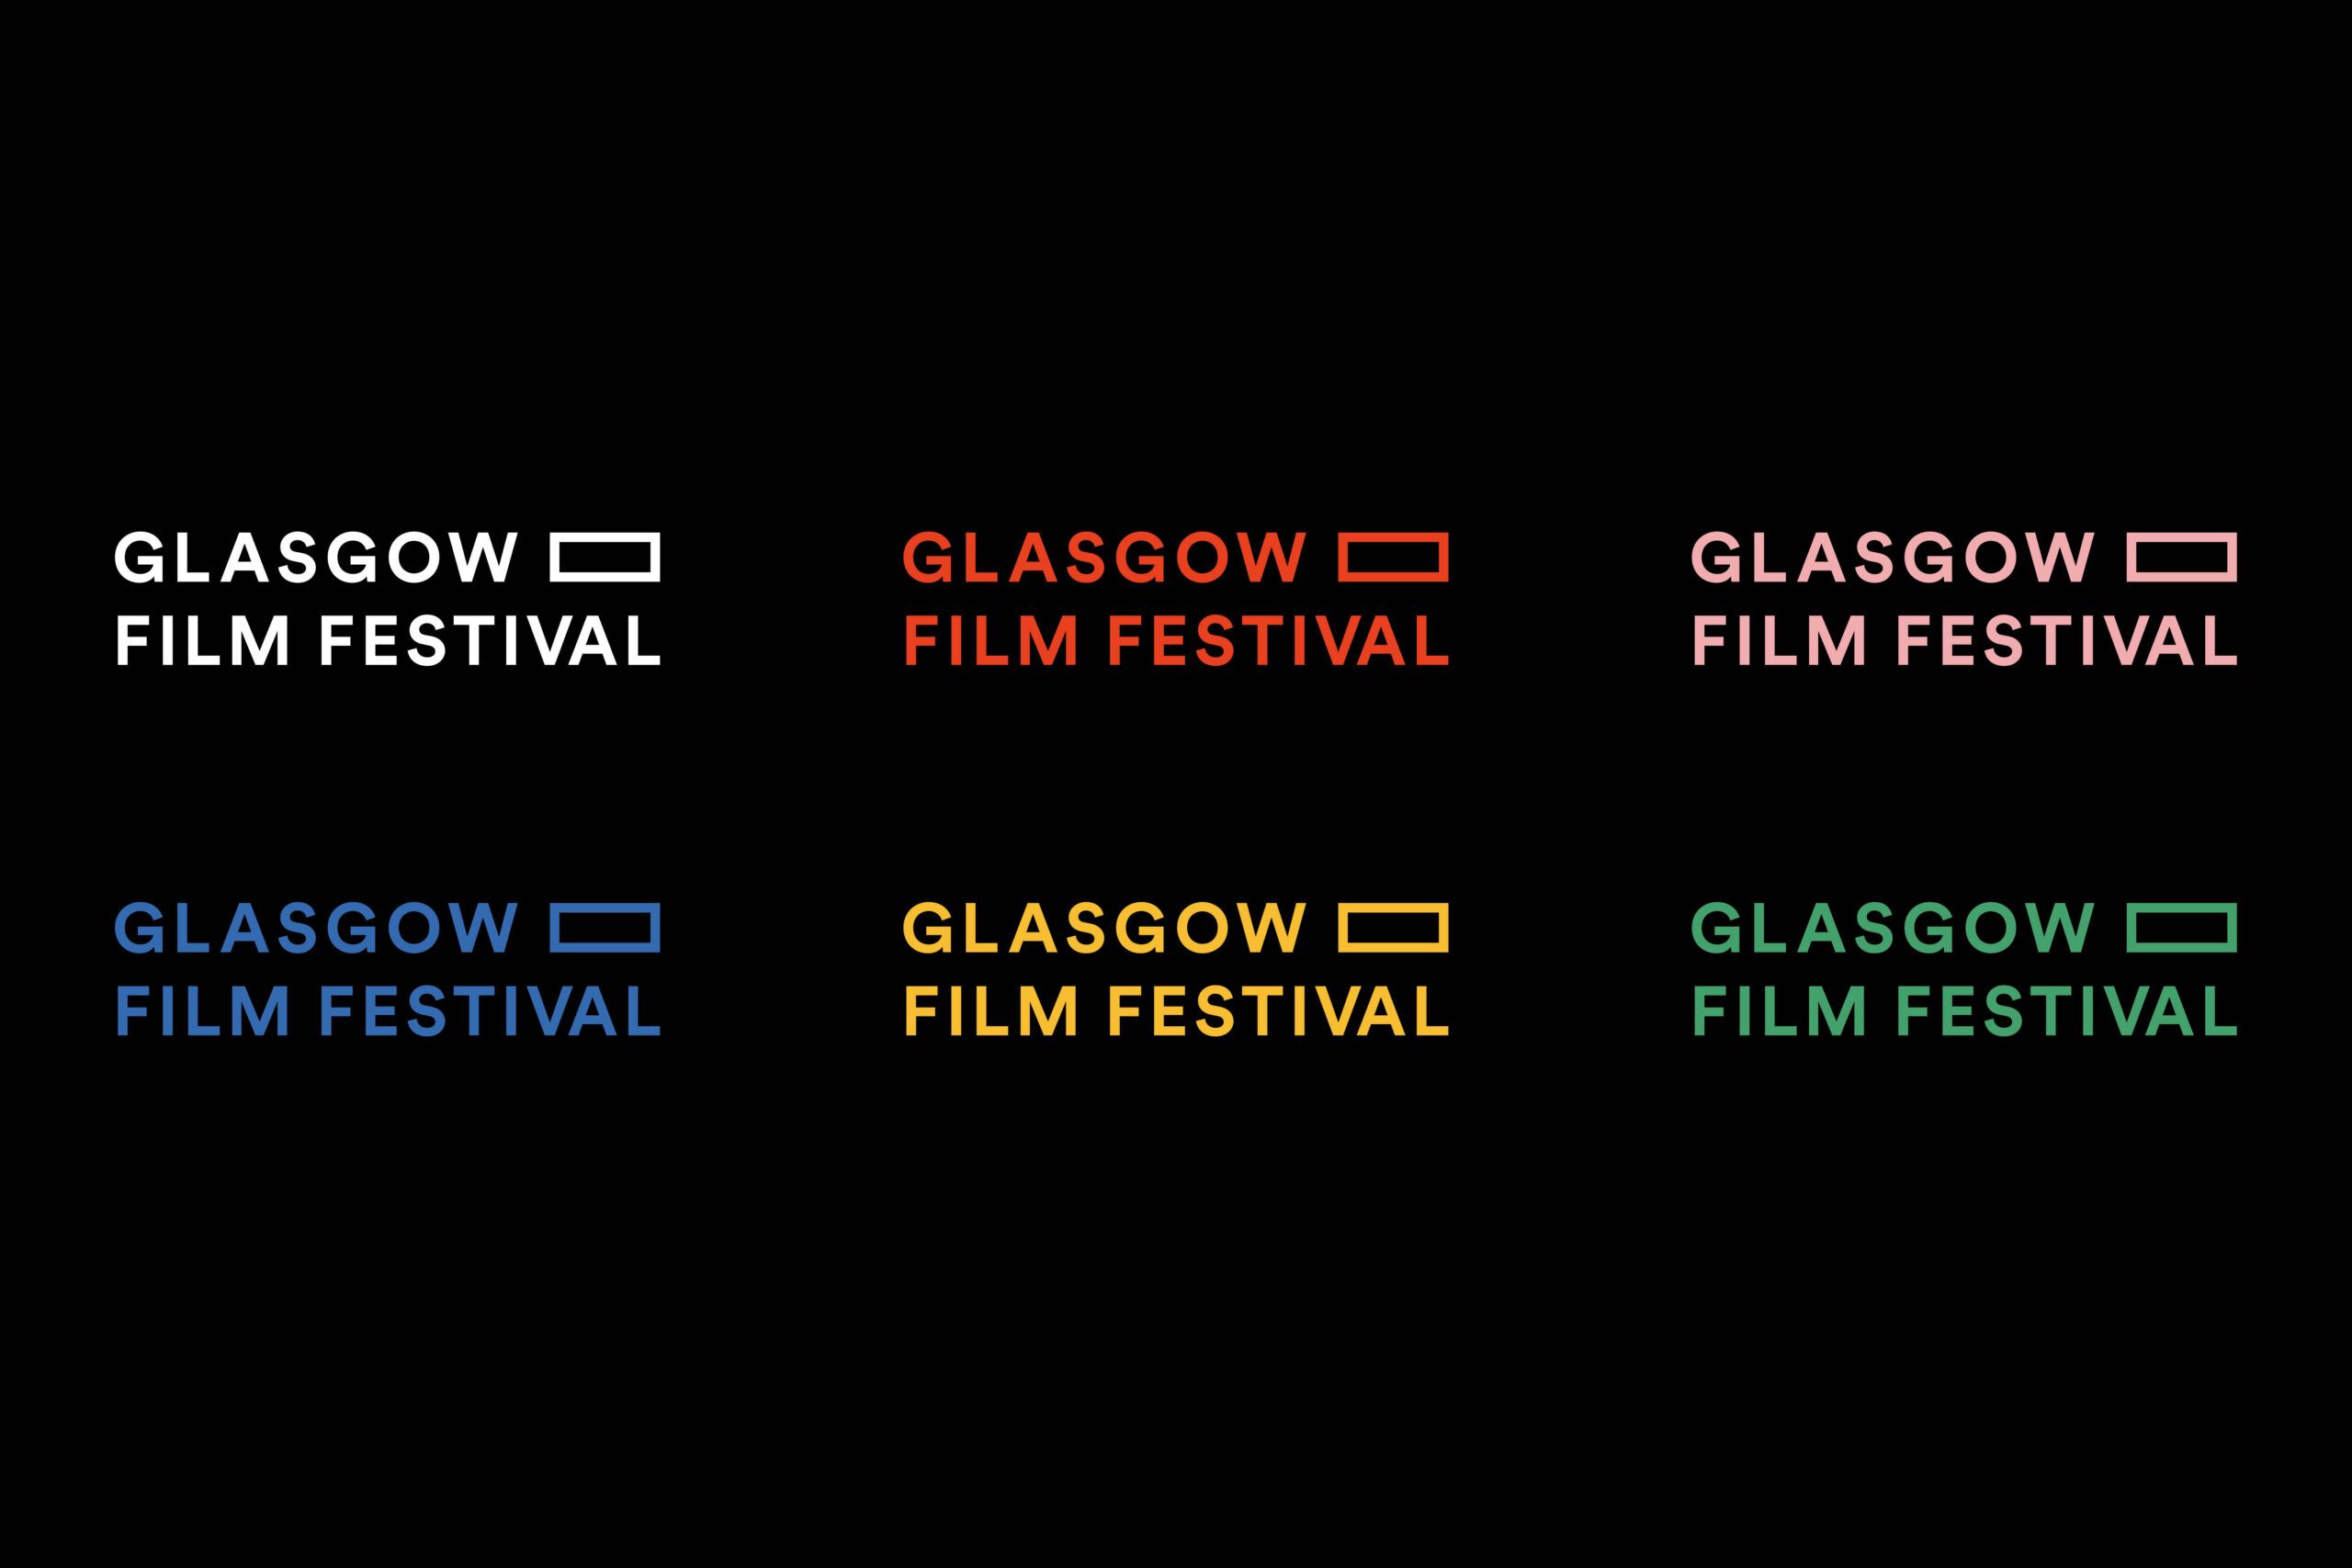 O Street Glasgow Film Festival Rebrand - Flat Image of Branded Logos multicolour on black background.